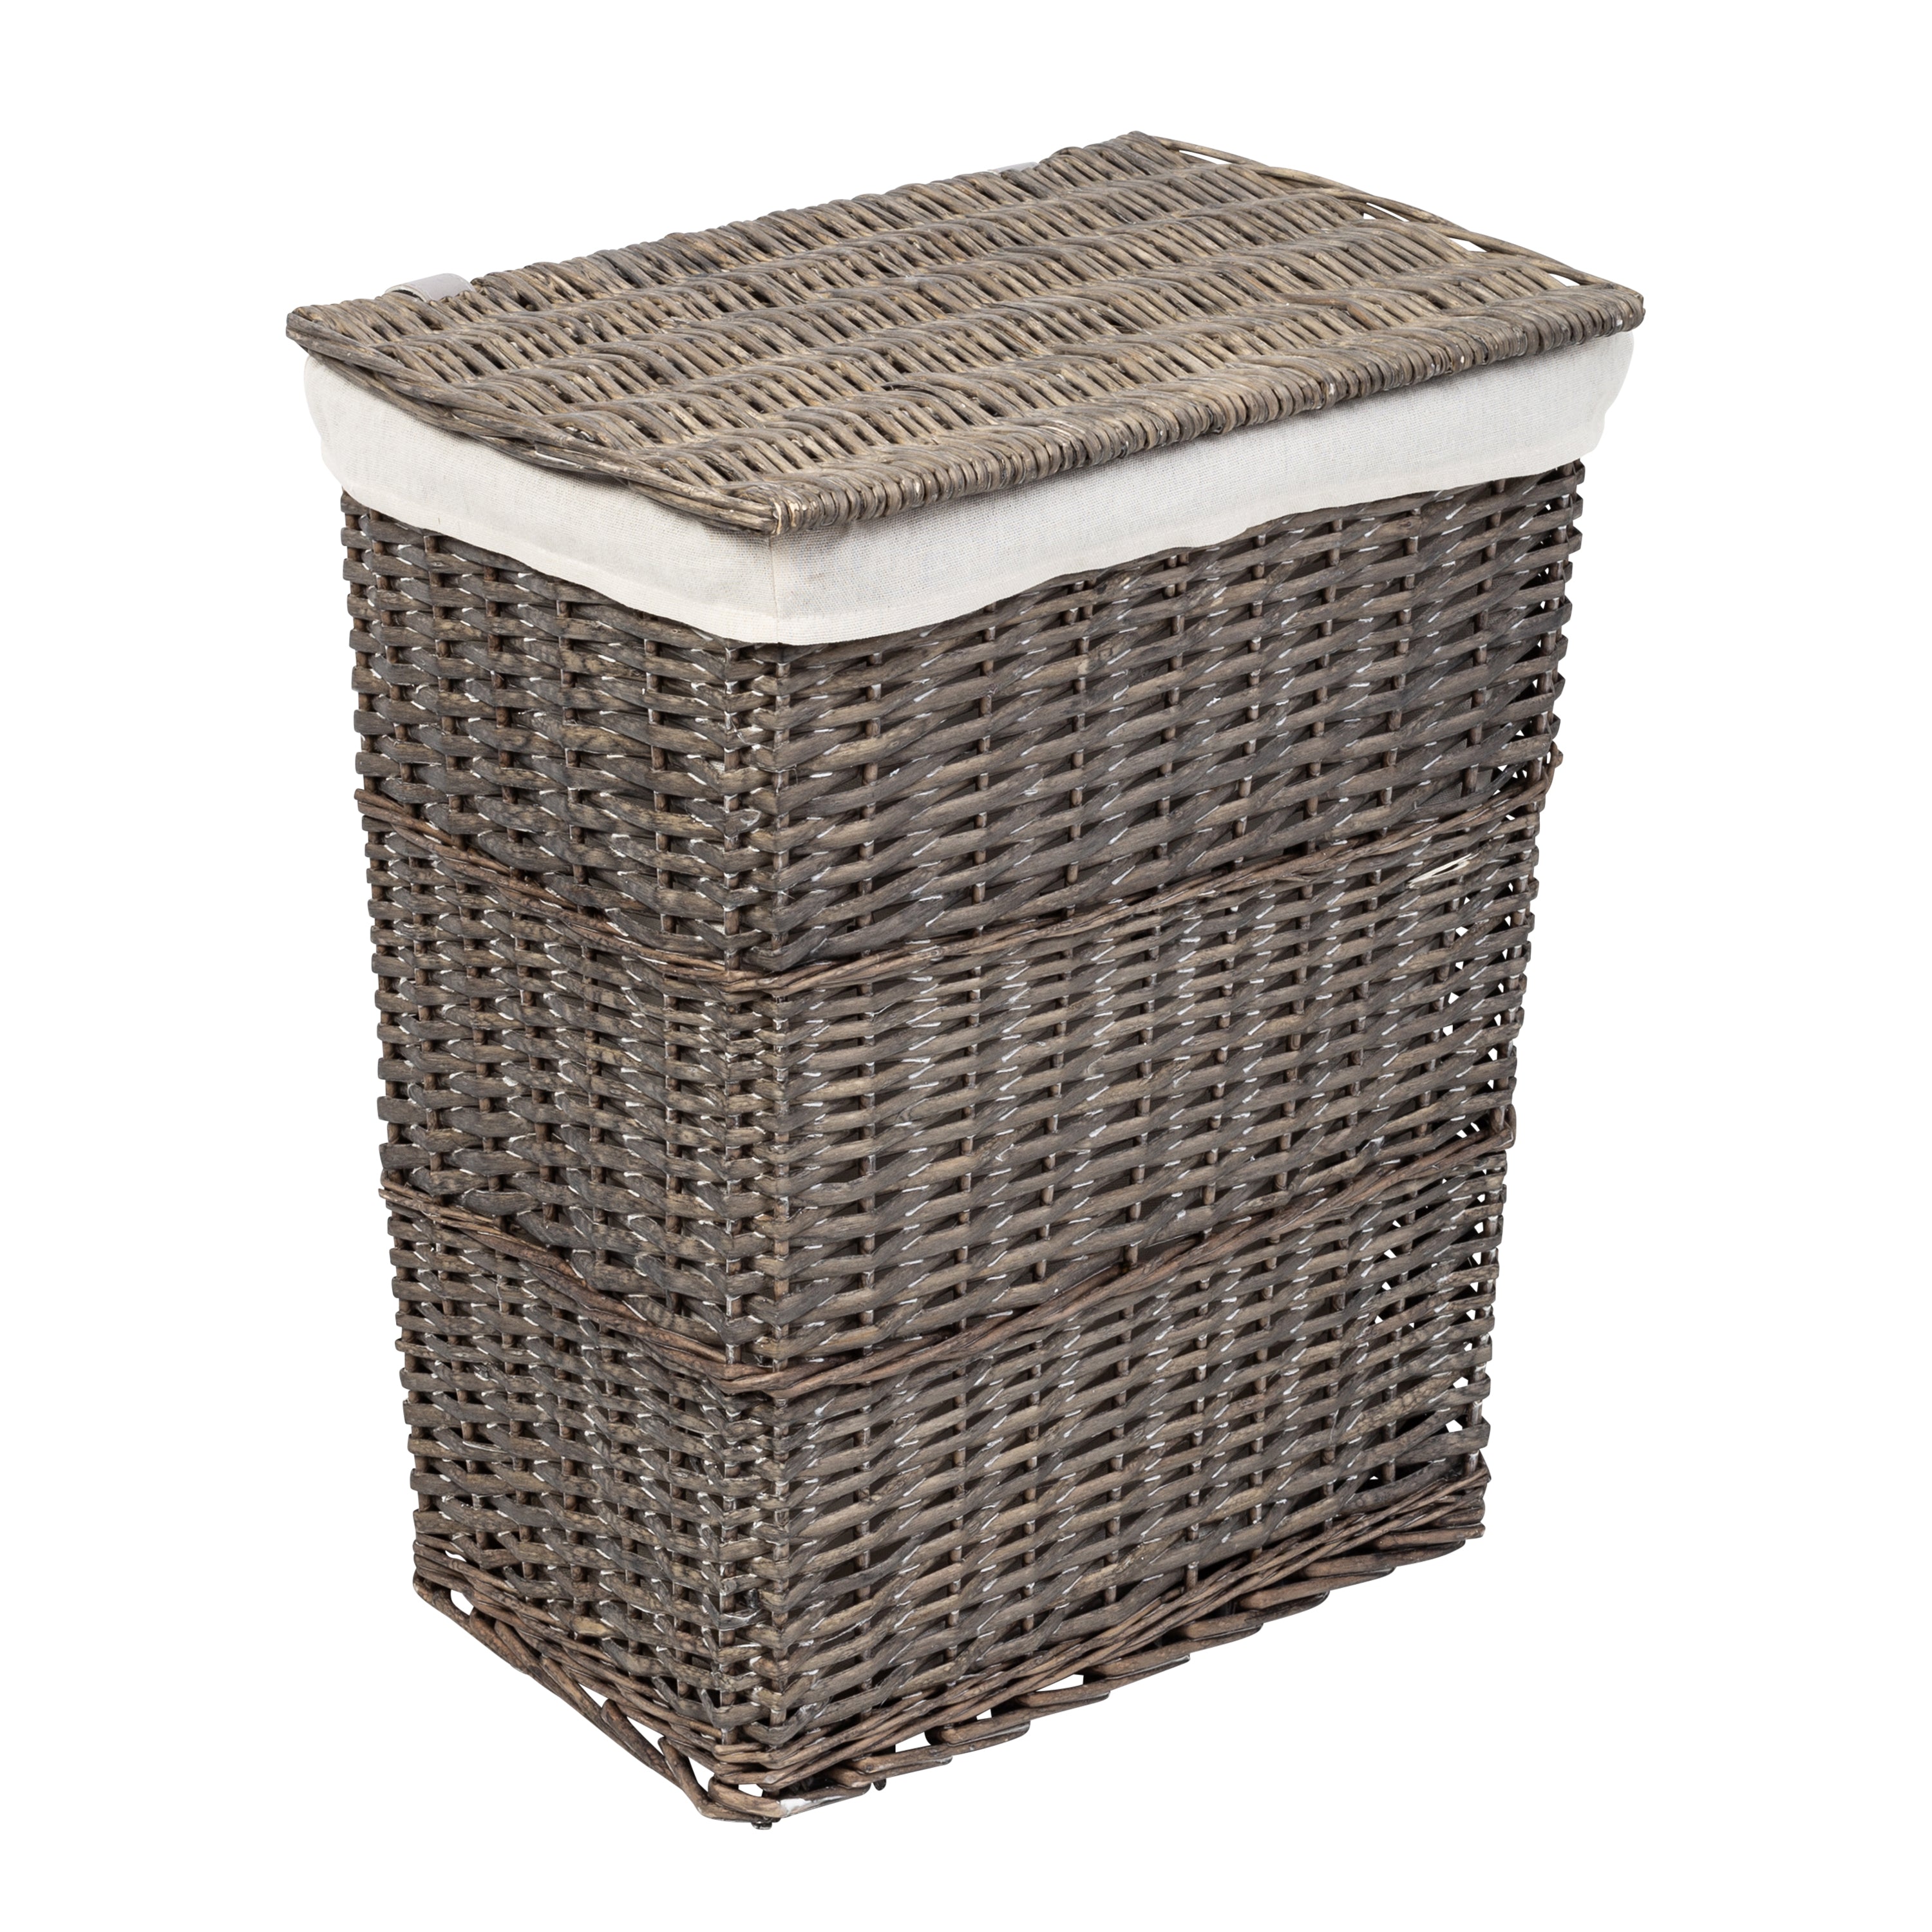 Gray Twisted Paper Rope 7-Piece Storage Basket Set